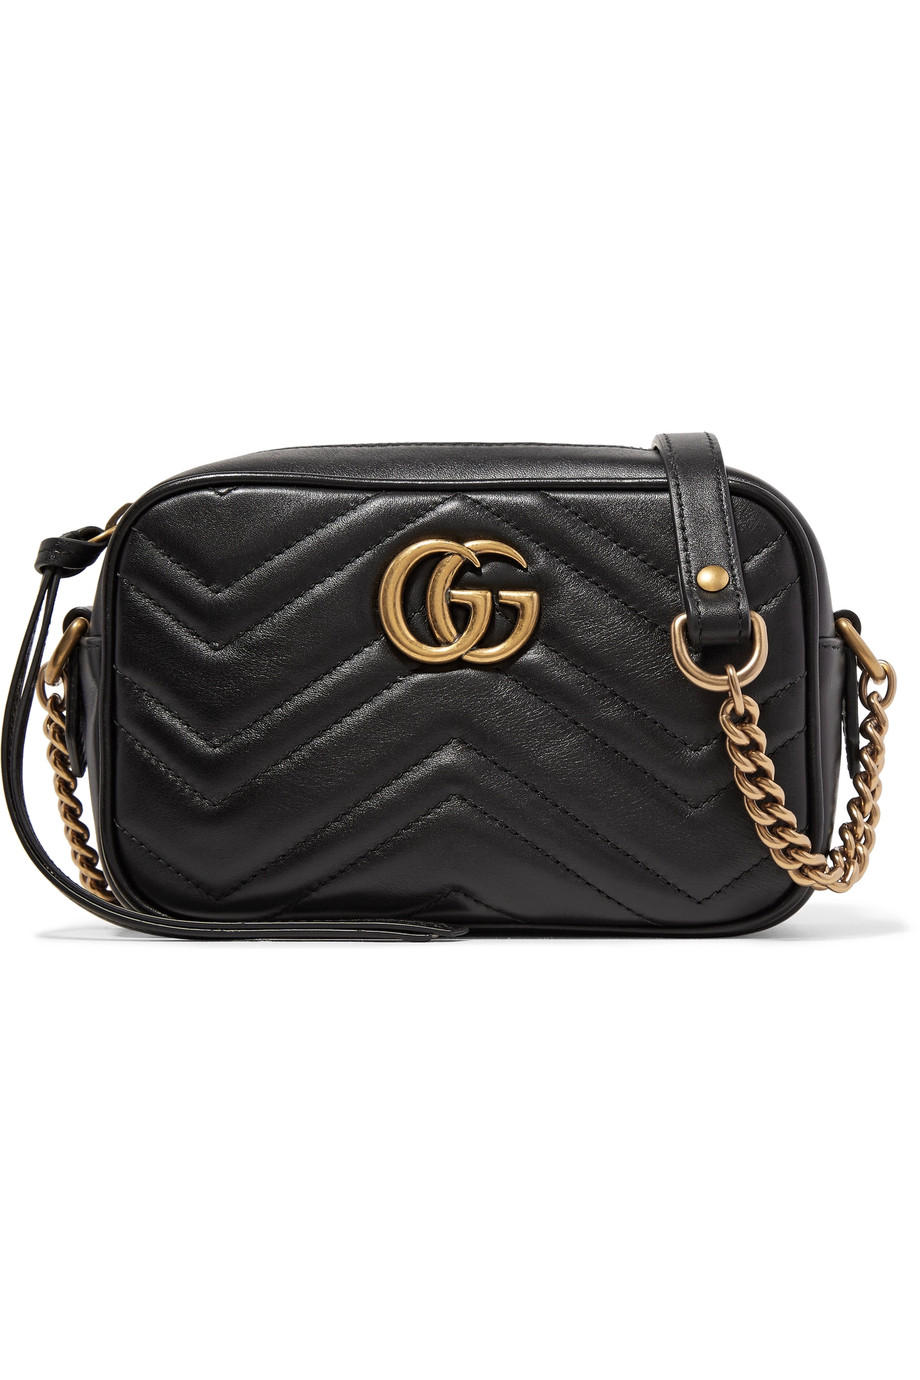 Gucci Marmont Matelasse Mini Bag 